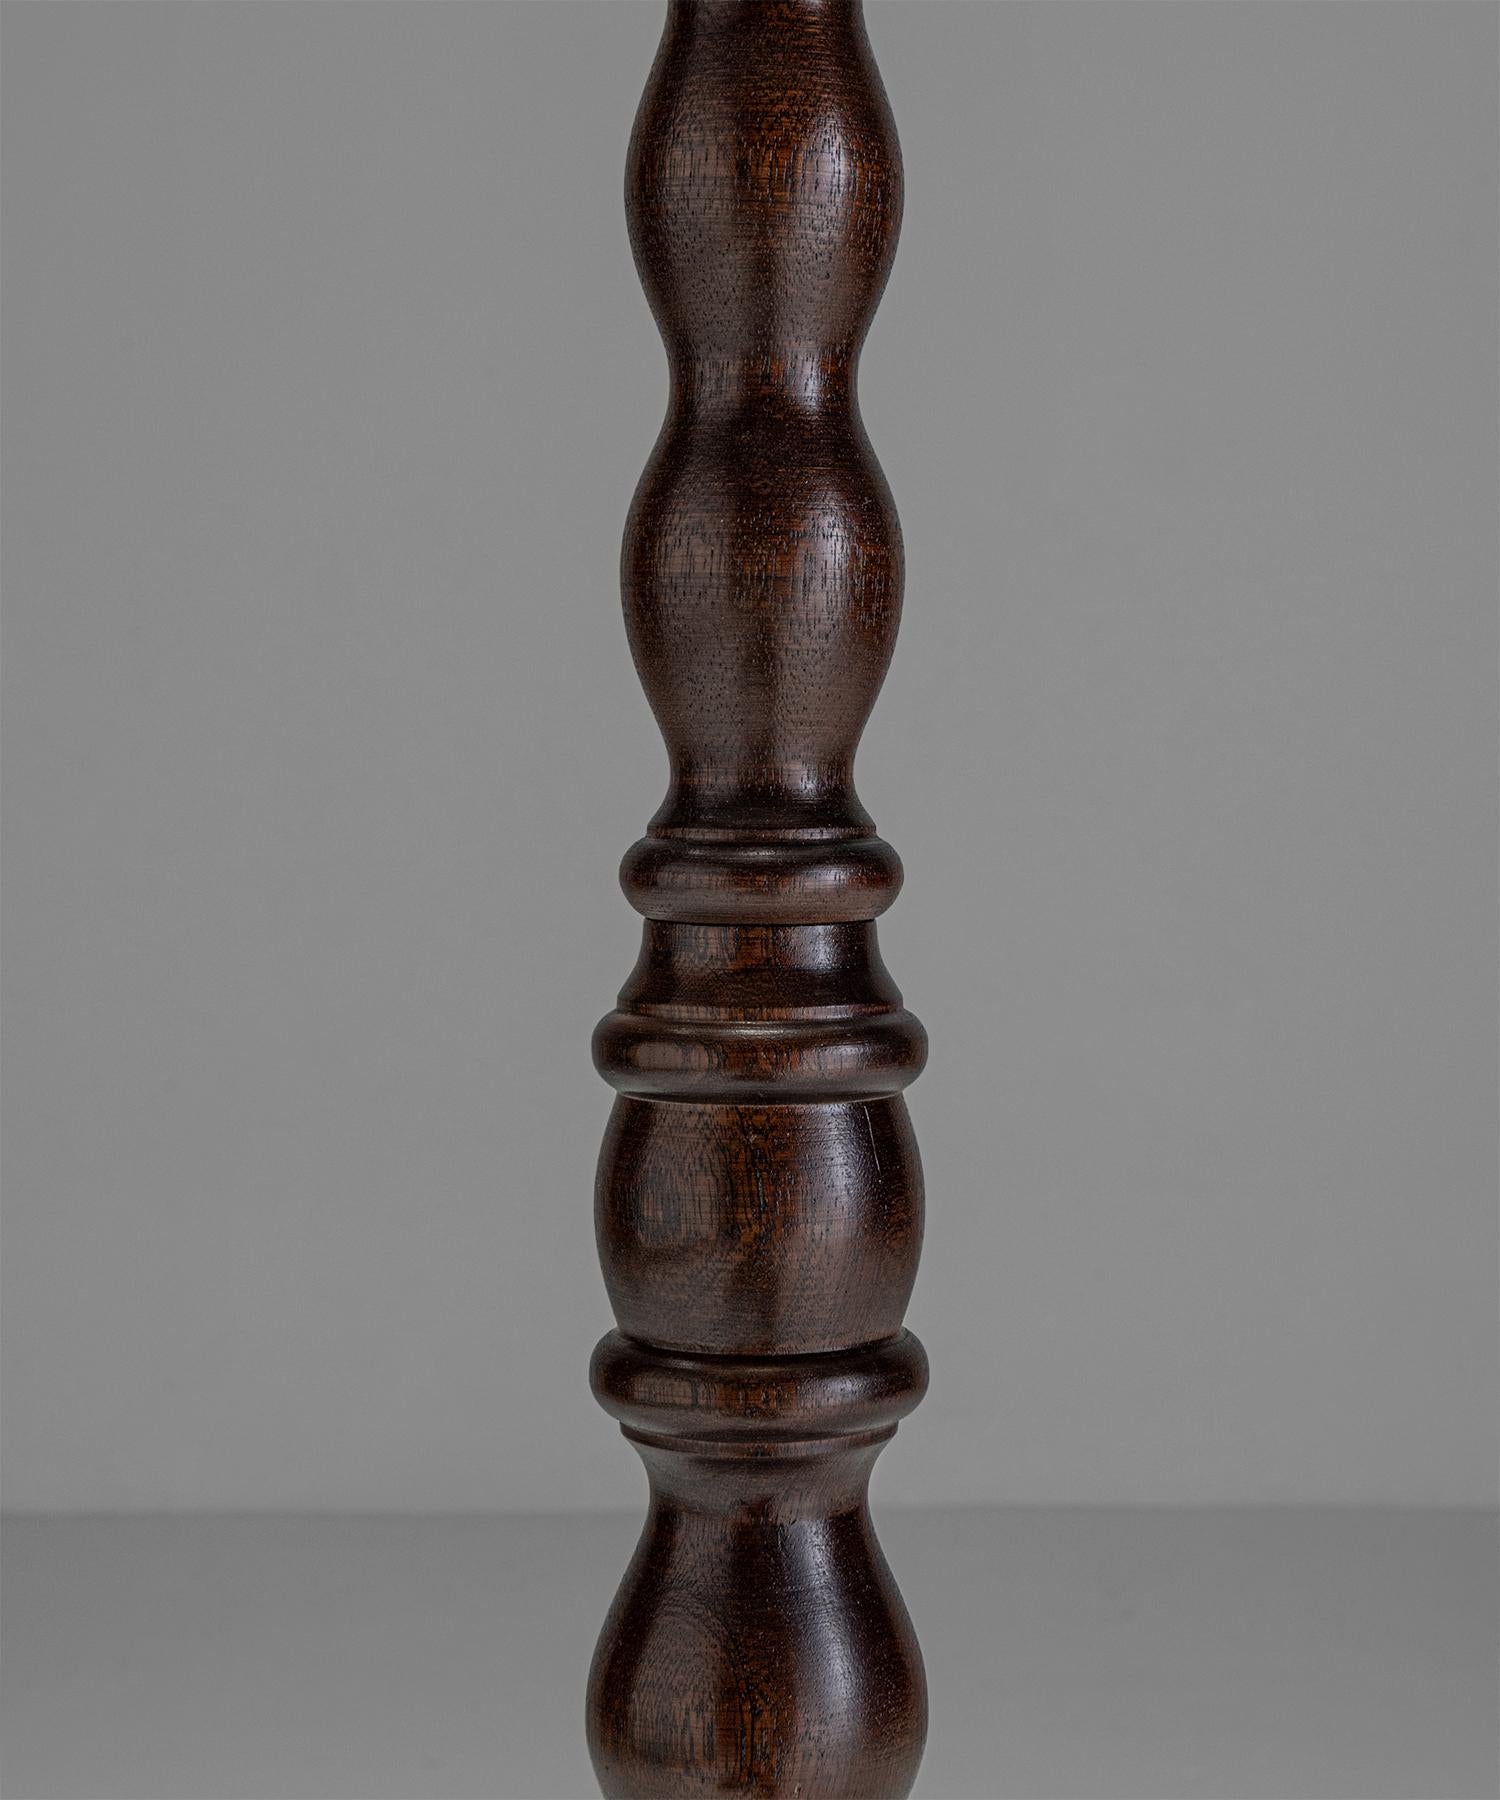 Oak Bobbin floor lamp

England circa 1940

Solid oak carved bobbin stand, with new linen shade.

Measures: 24